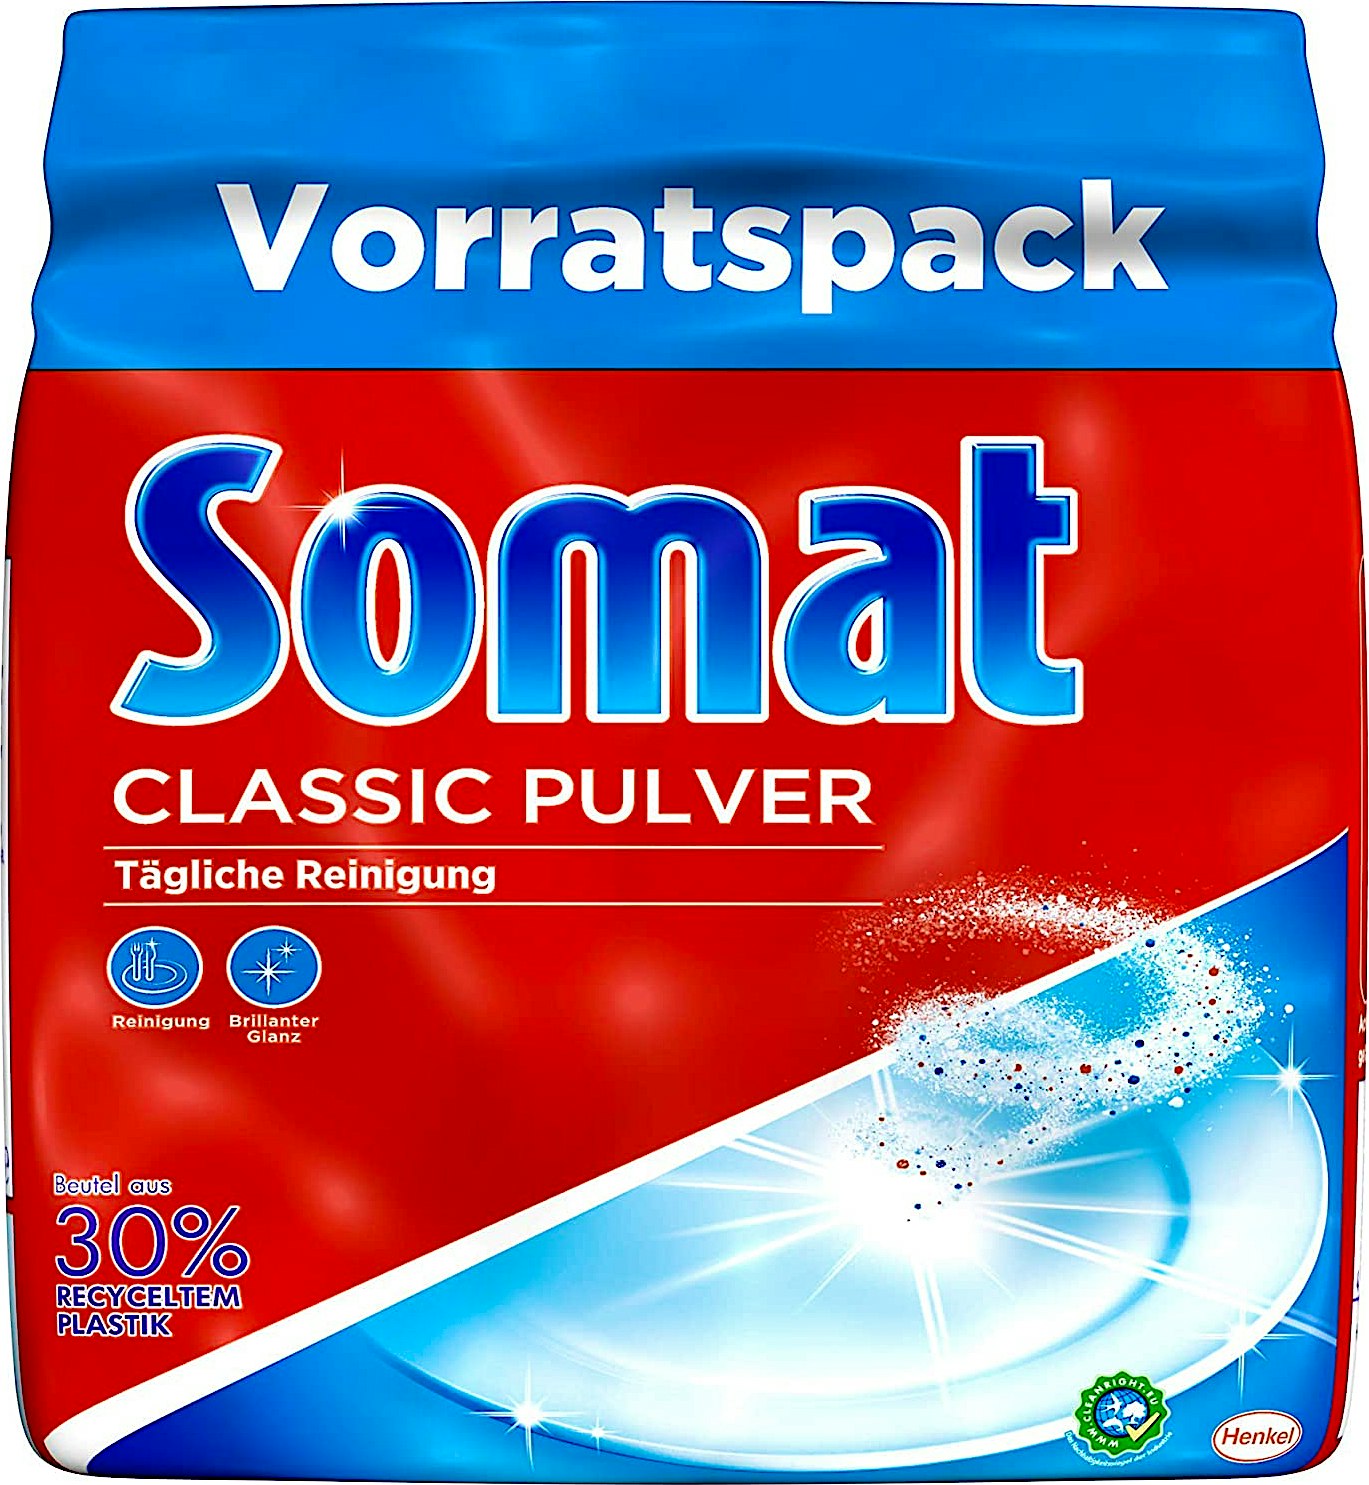 Somat Classic Pulver 1.2 kgs